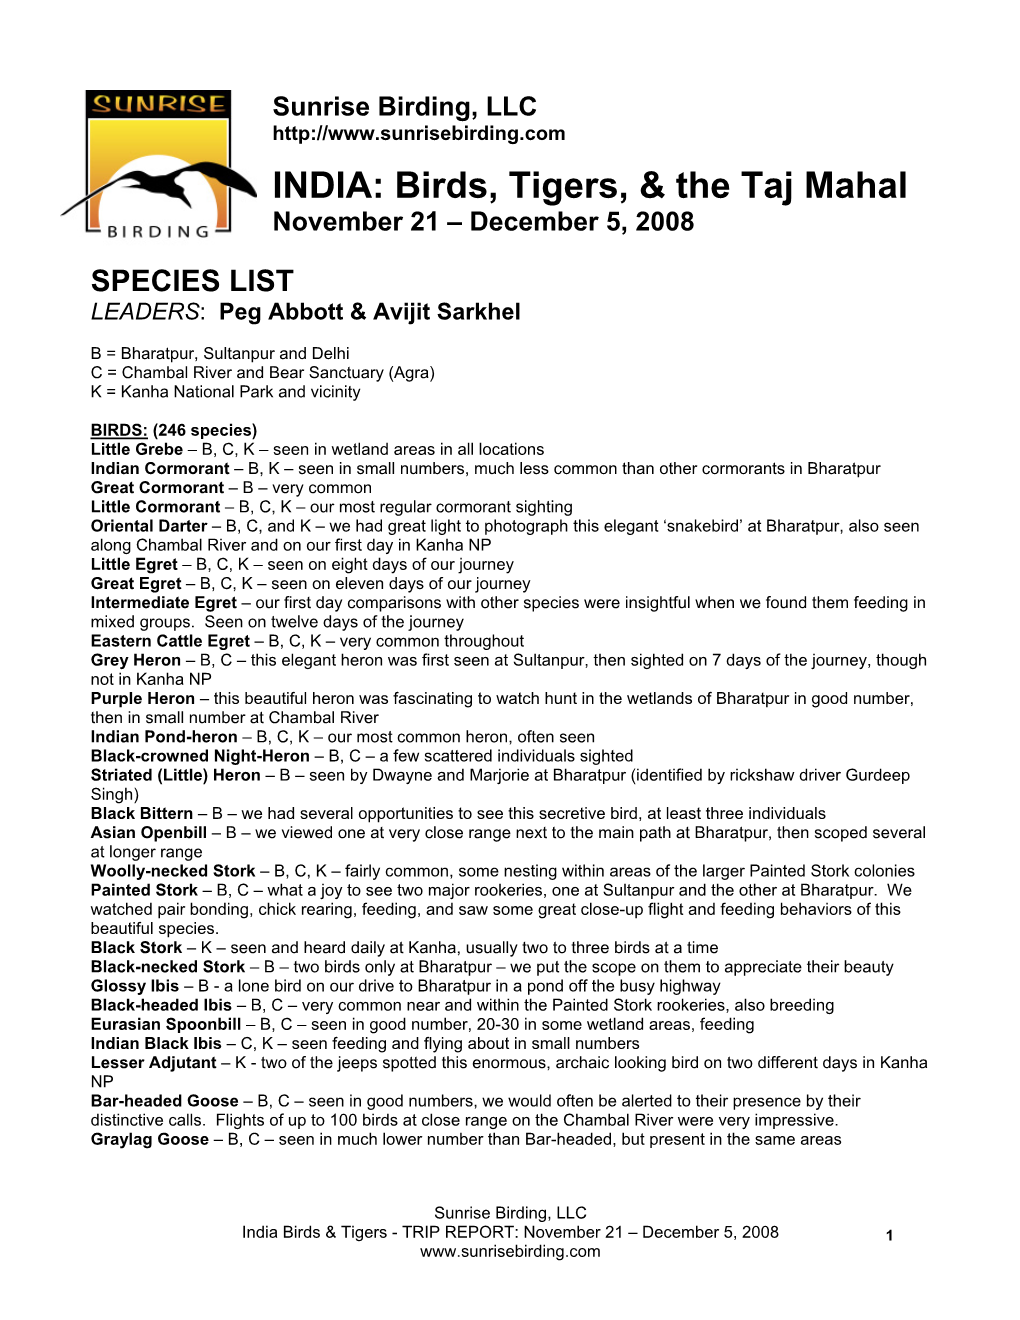 INDIA: Birds, Tigers, & the Taj Mahal